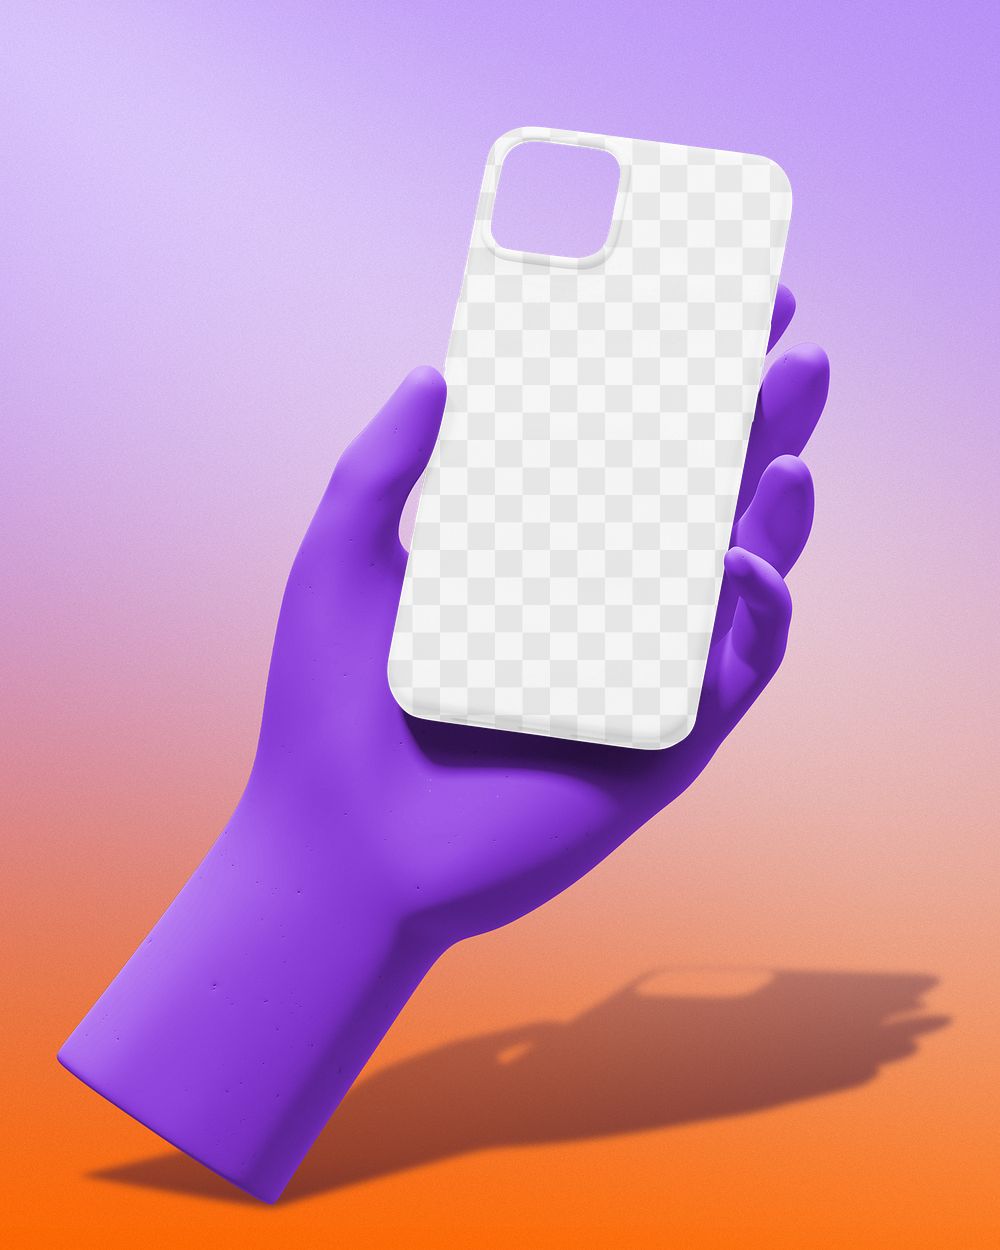 3D iPhone case mockup, transparent design